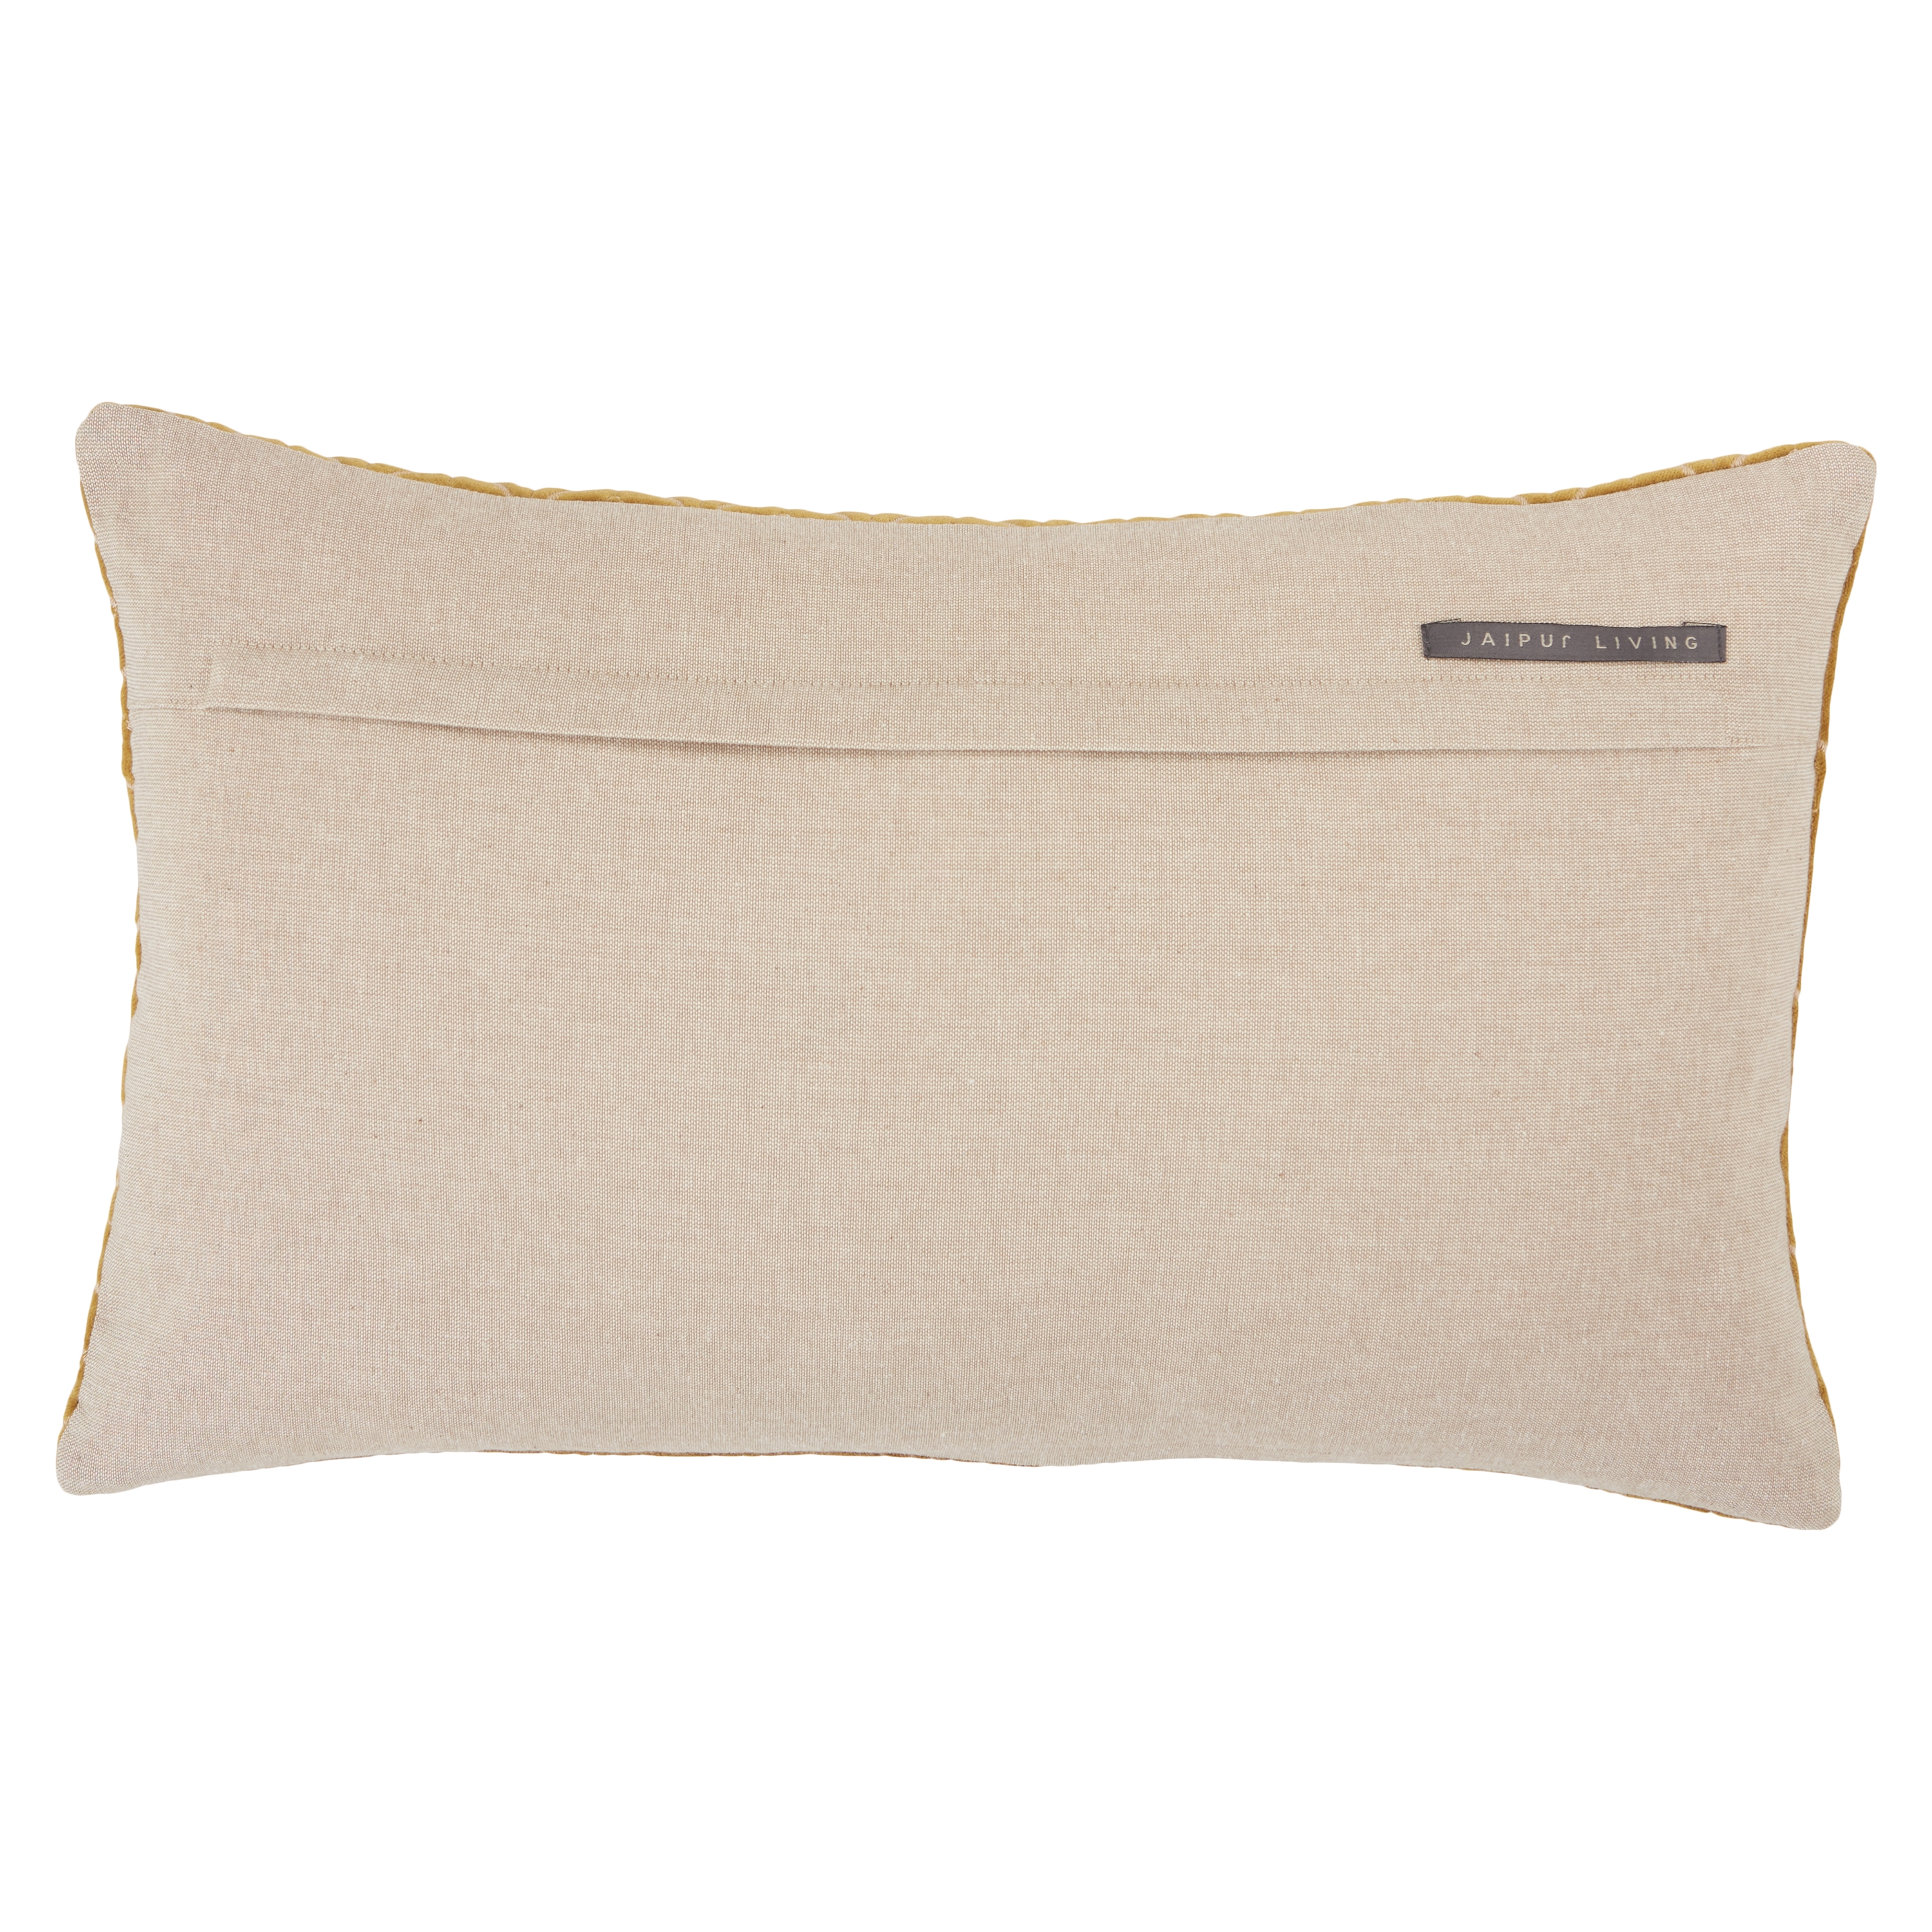 Nouveau Lumbar Pillow, Gold, 21" x 13" with poly insert - Image 1